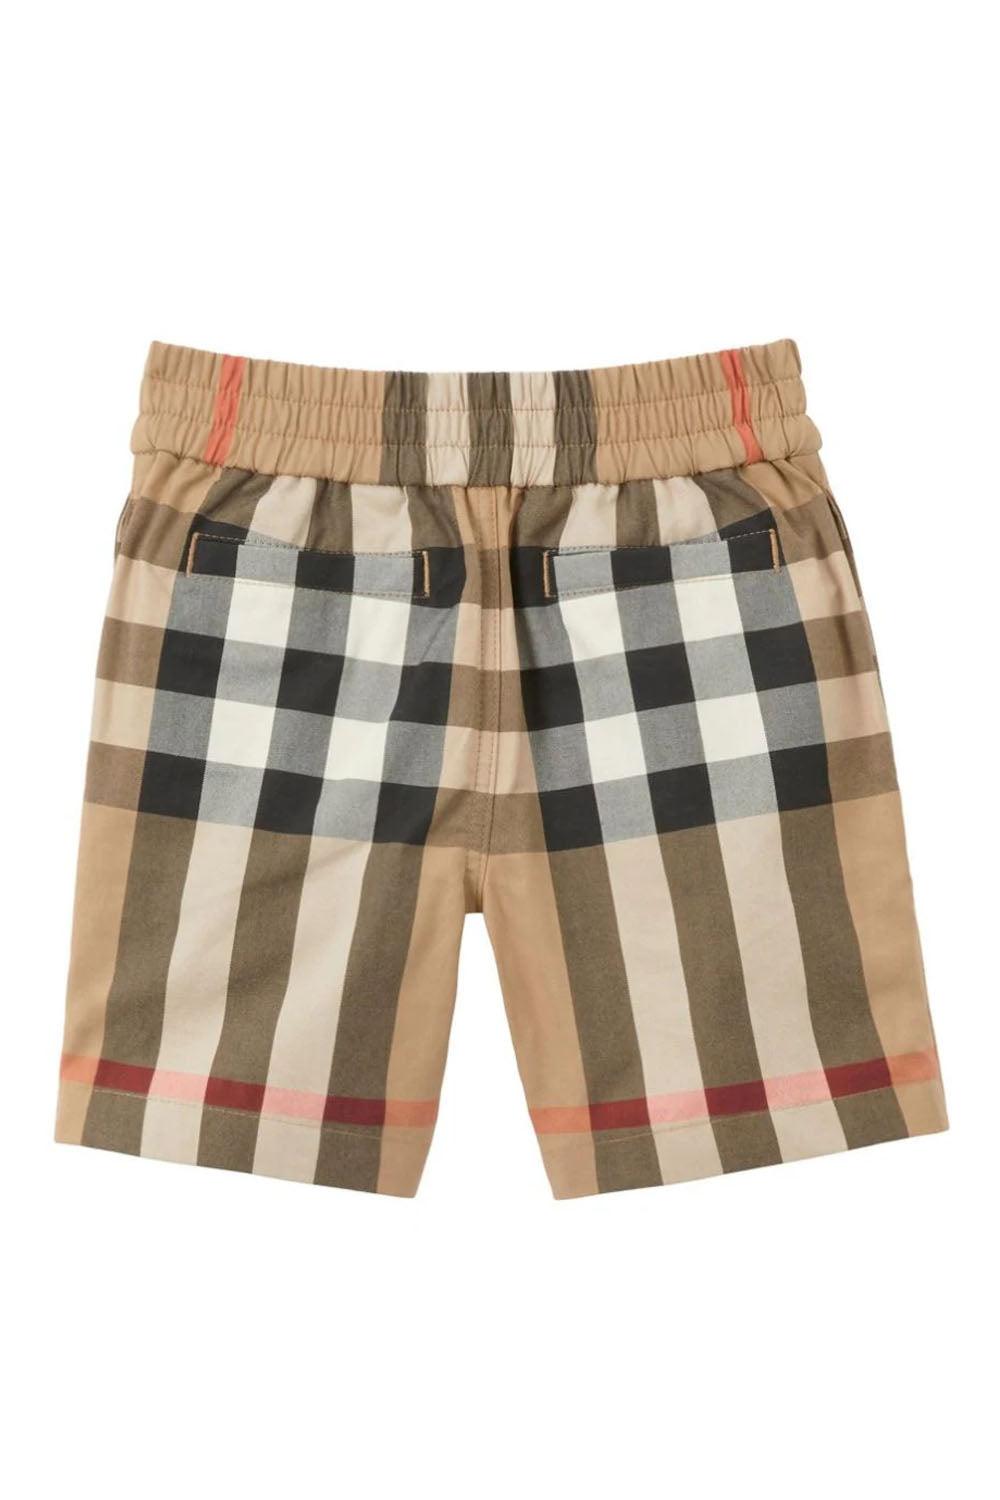 Check Cotton Shorts Baby for Boys - Maison7